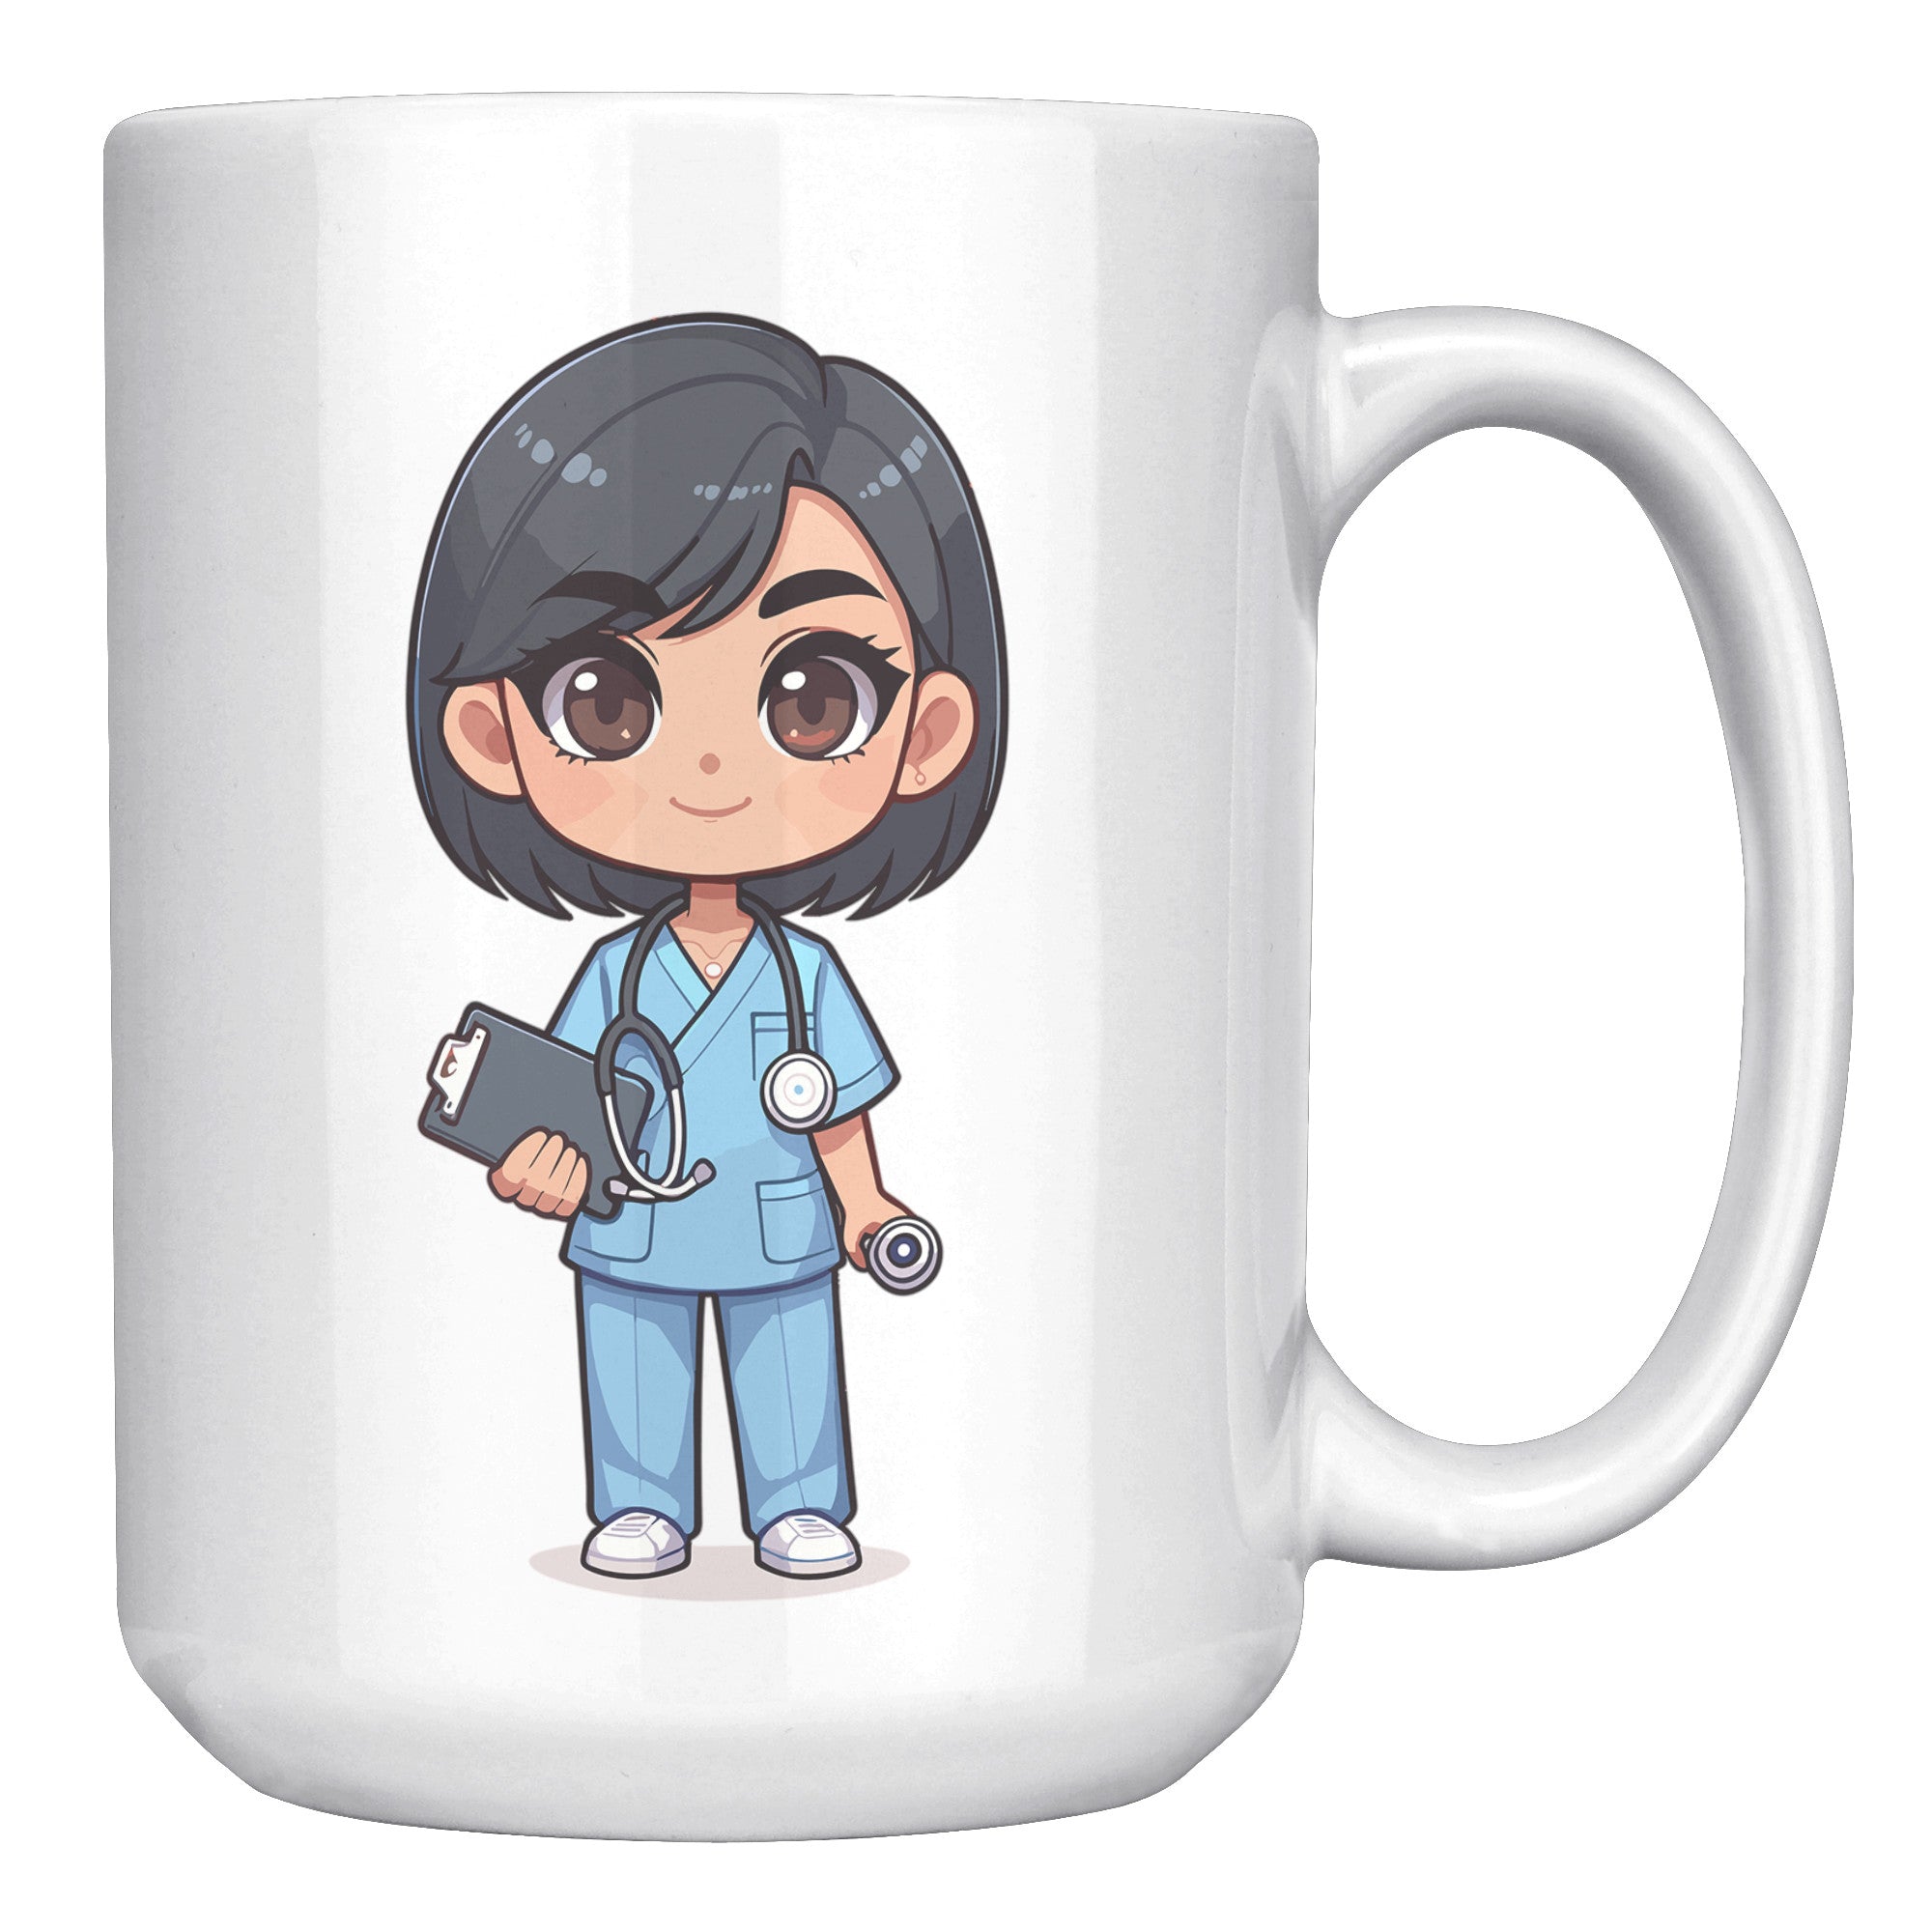 15 oz Custom RN Nurse Gift Coffee Mug - Cute Cartoon Nurse Design - Perfect for Nurse's Day, Birthdays, Graduations - Durable & Fun Mug for Everyday Heroes